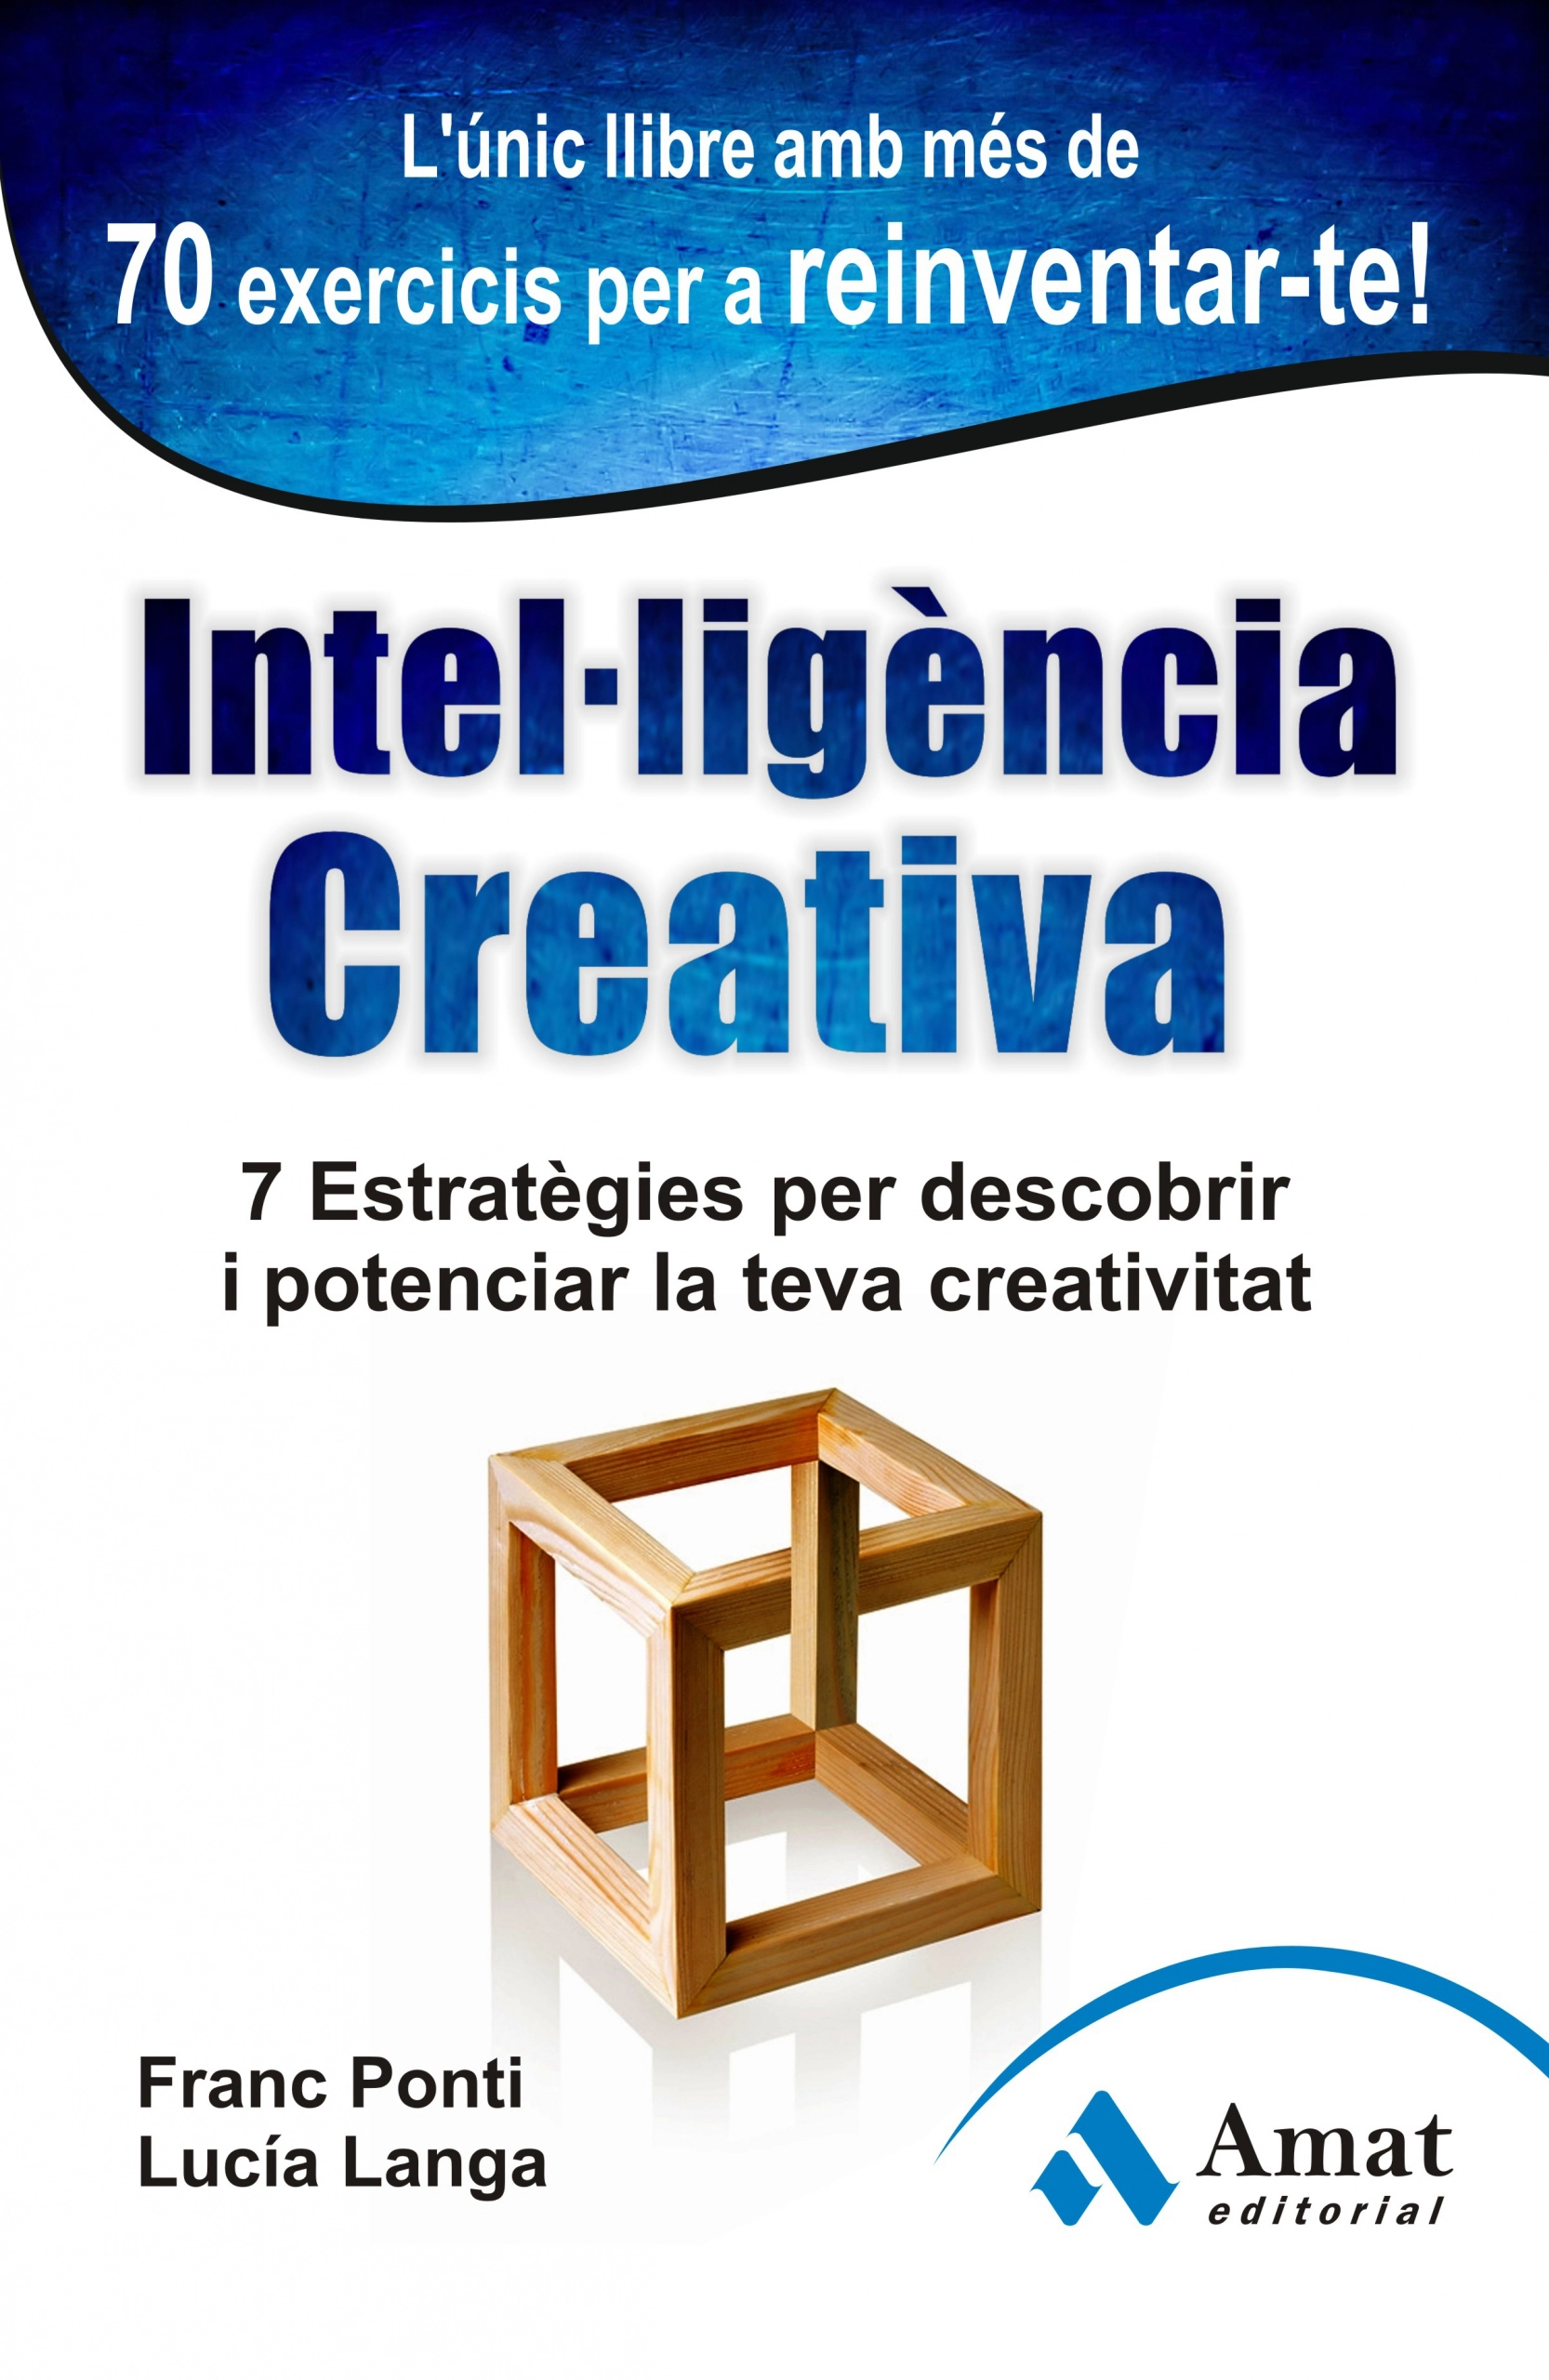 Intel·ligència creativa | Franc Ponti y Lucía Langa | Libros para vivir mejor